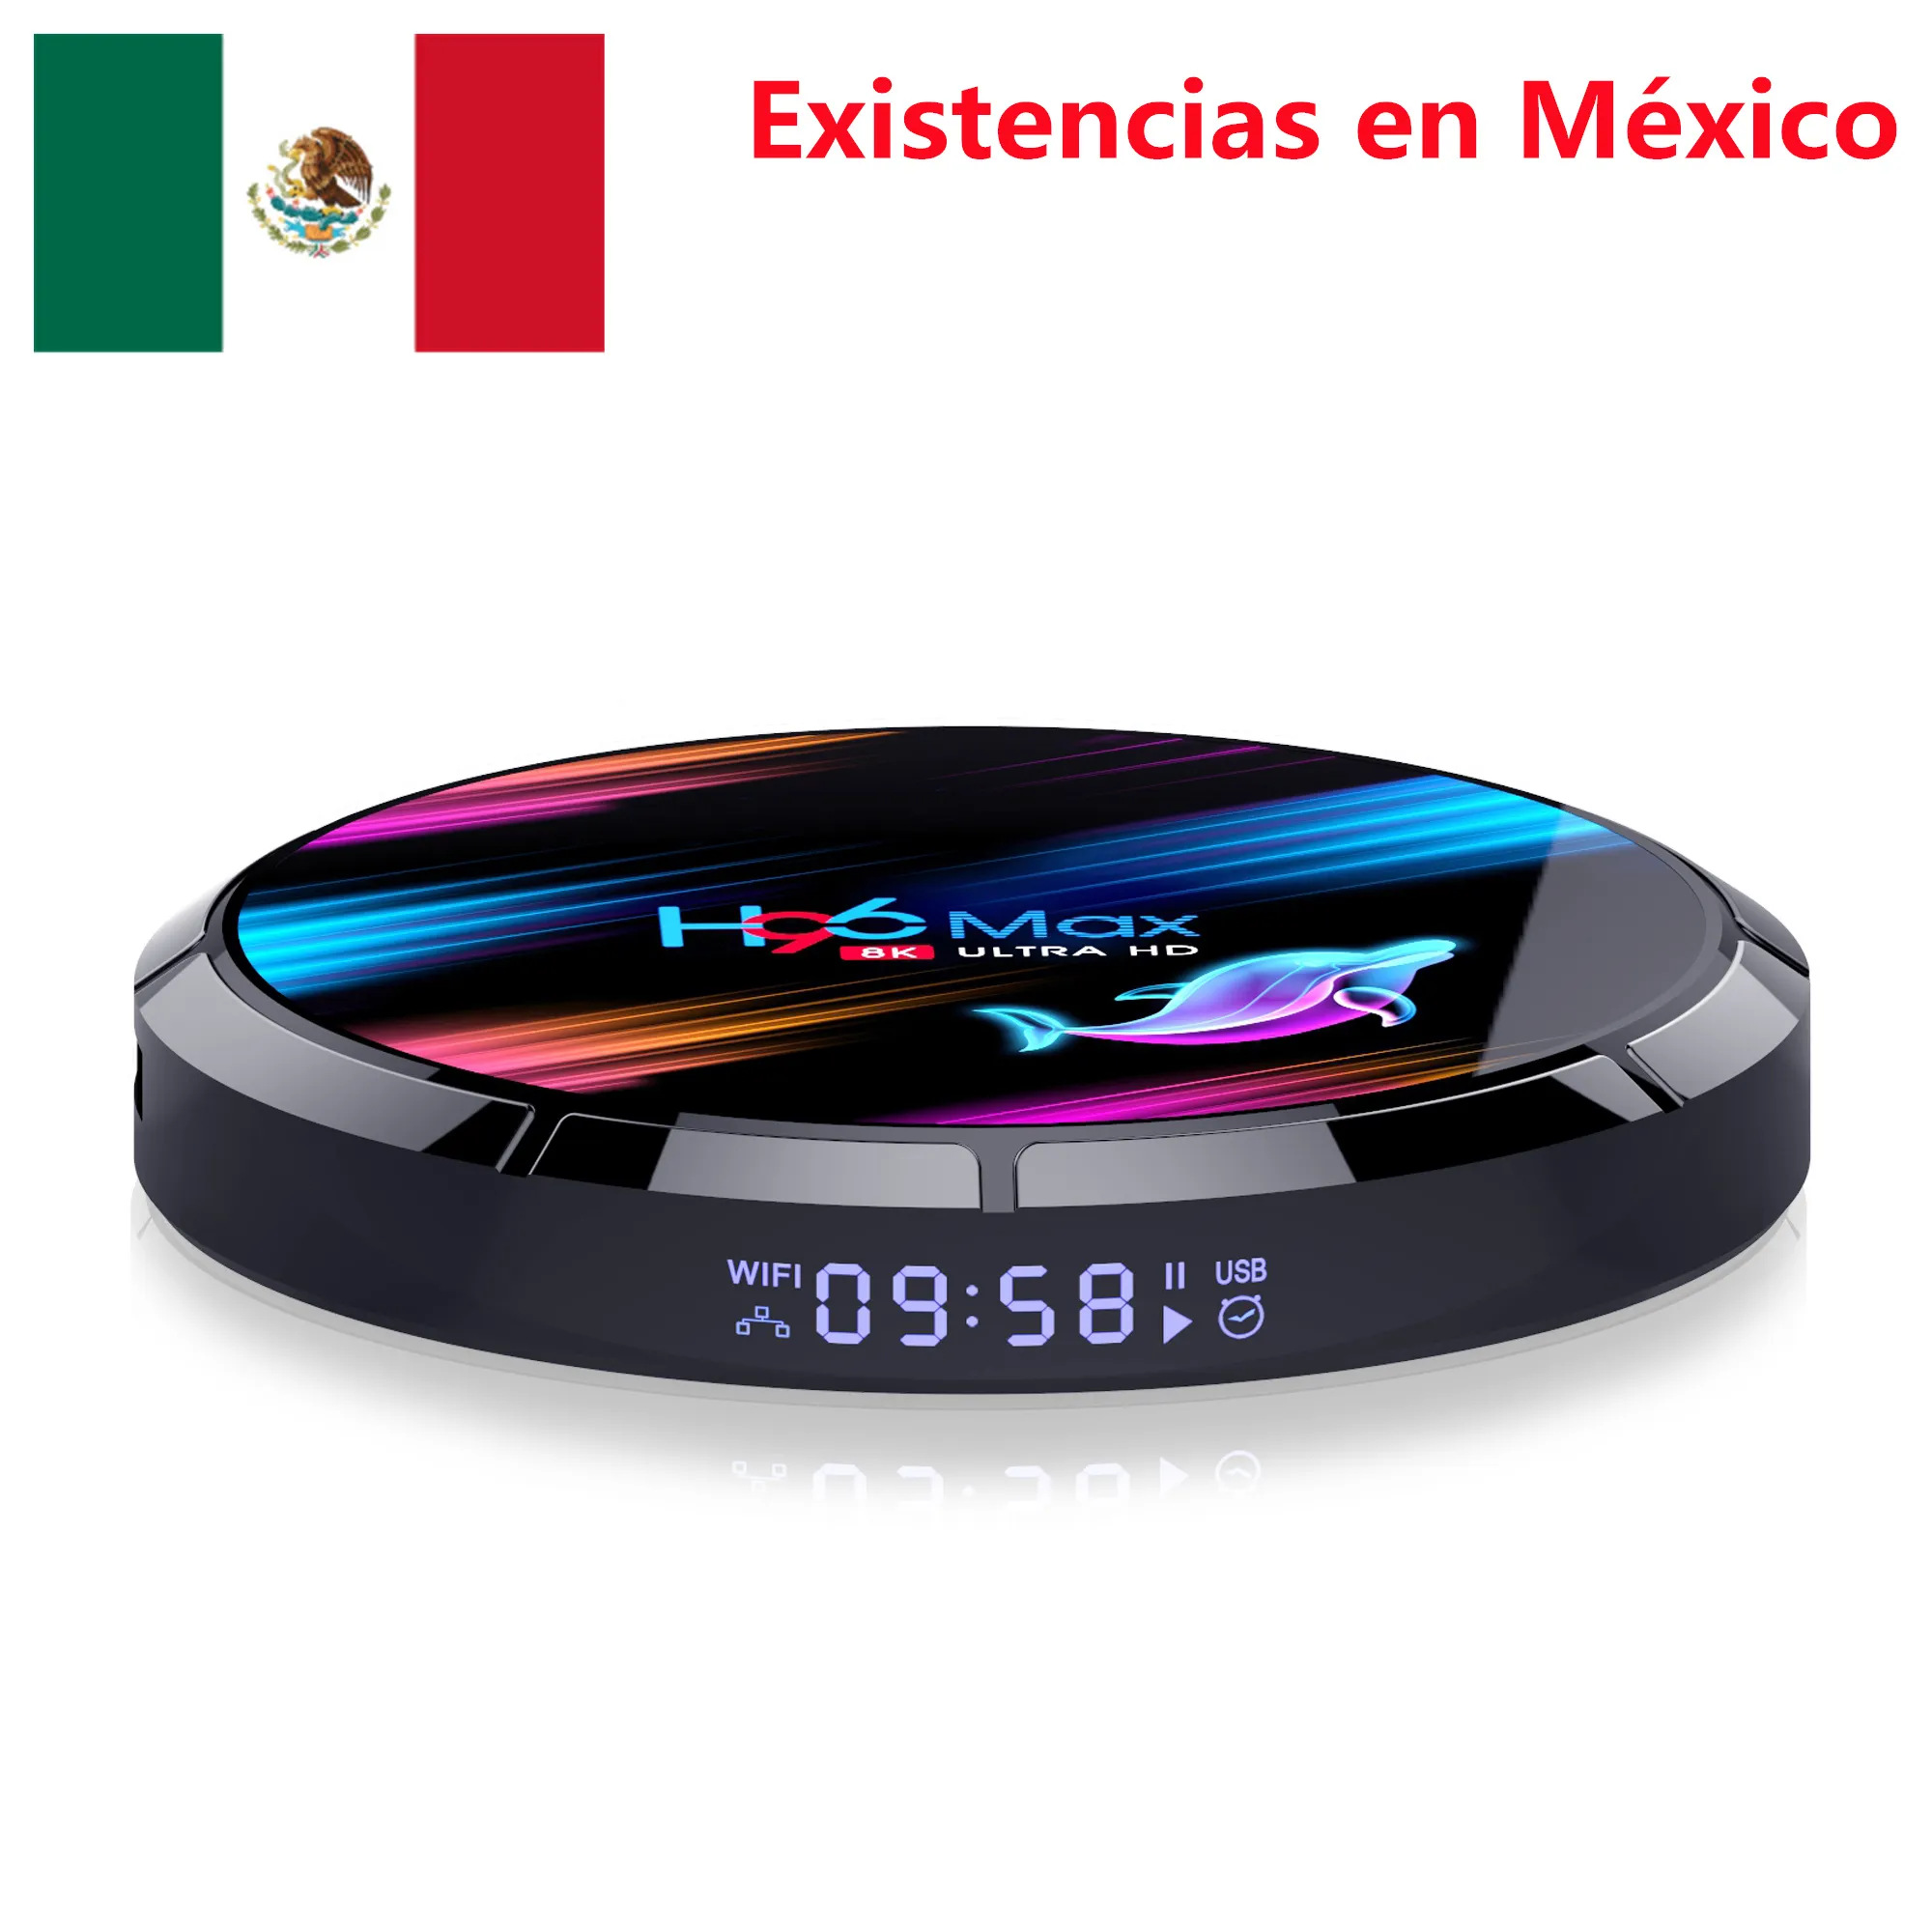 MEXICO VOORRAAD H96 MAX X3 TV BOX Android 9.0 Amlogic S905X3 4GB 32 GB 2.4G 5G WiFi BT 1000M Lan 8K